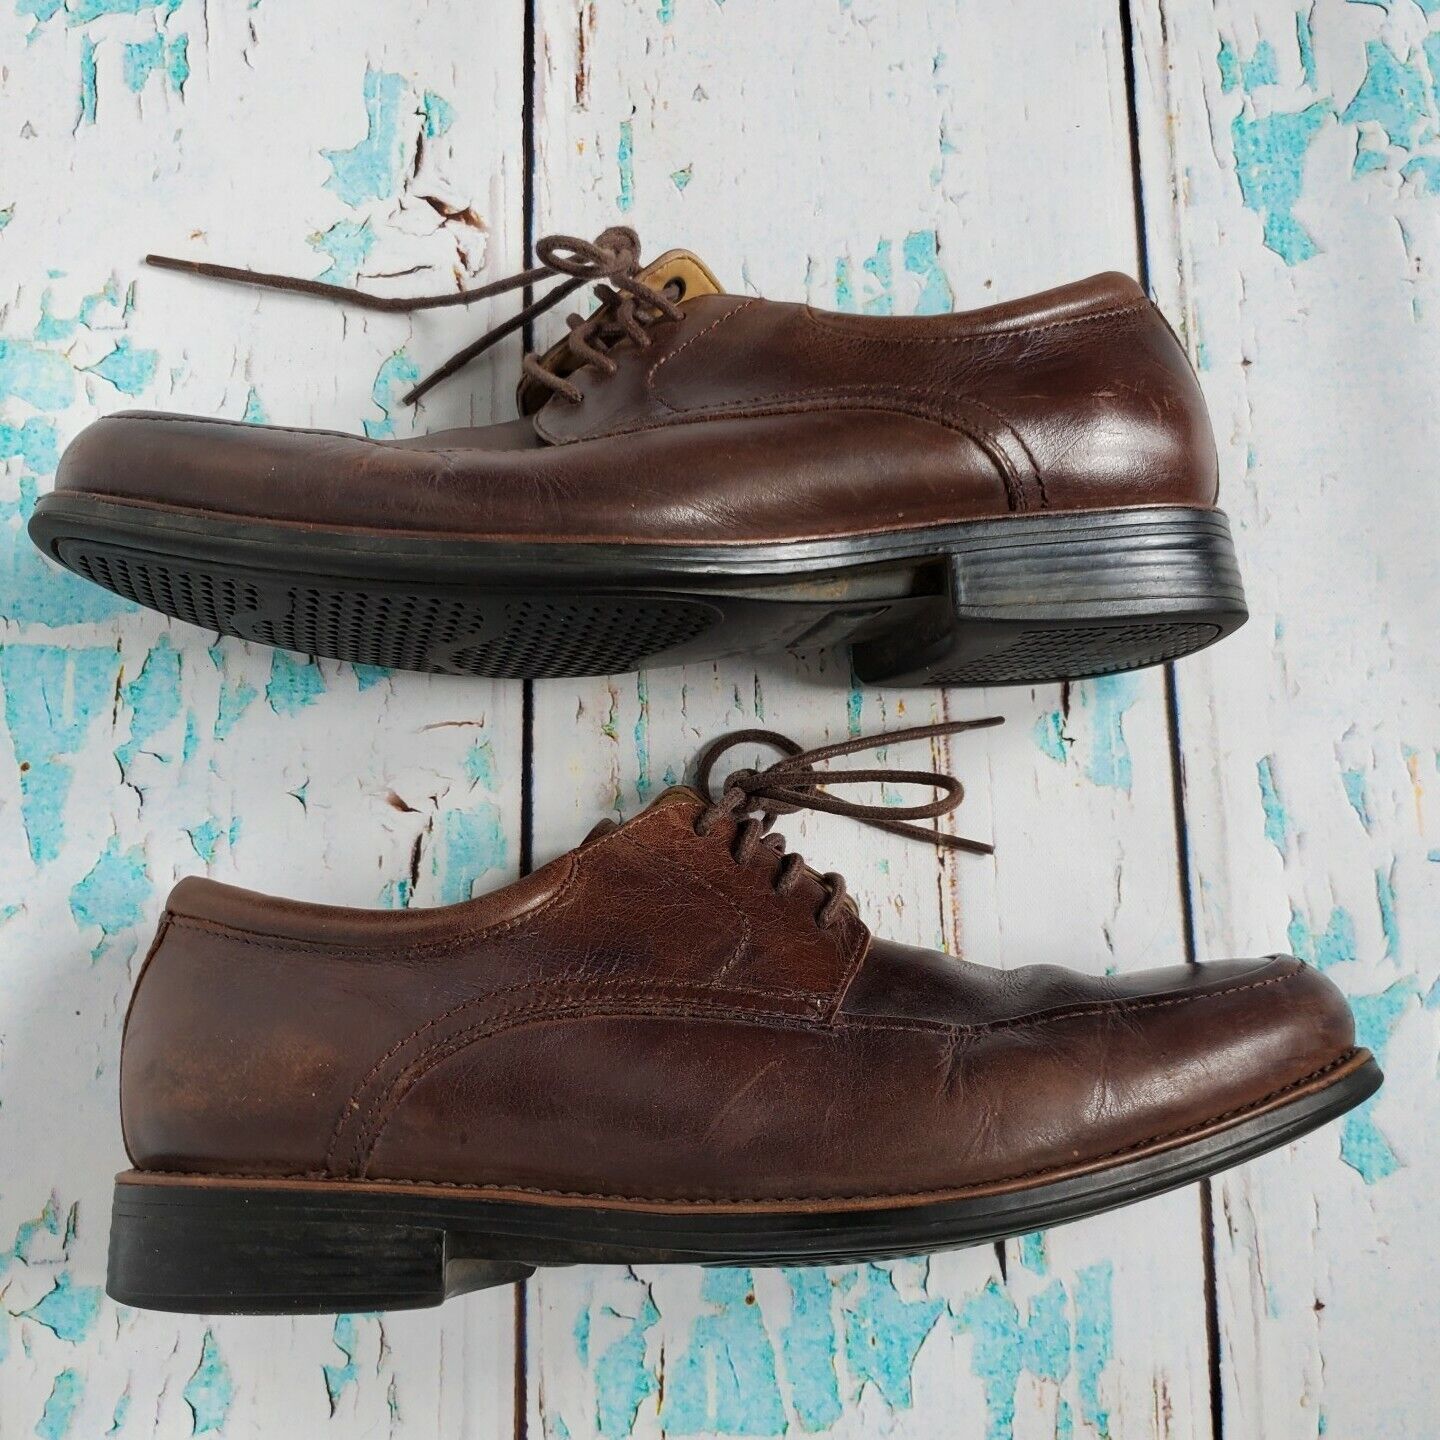 Johnston Murphy Men's 8.5 Shoes Brown Leather Lace Up J Murphy 207430 - $23.14